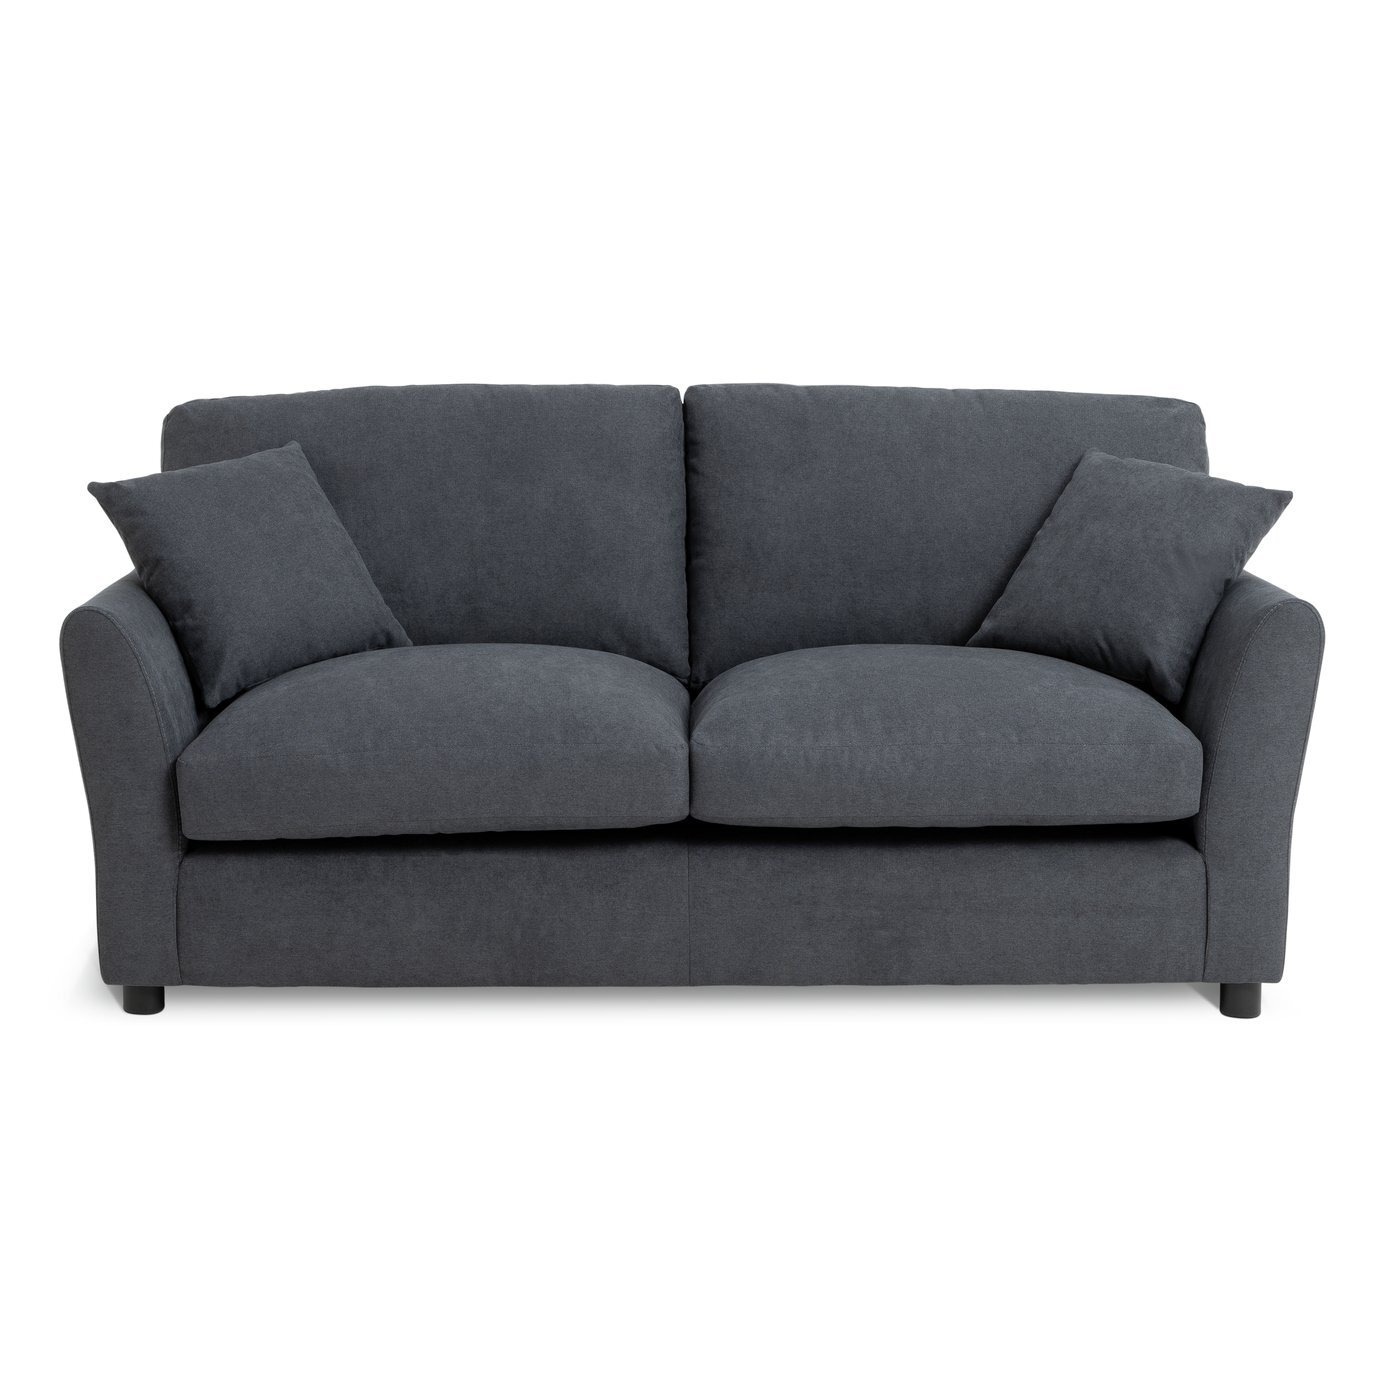 Argos Home Aleeza Fabric 3 Seater Sofa - Charcoal - image 1